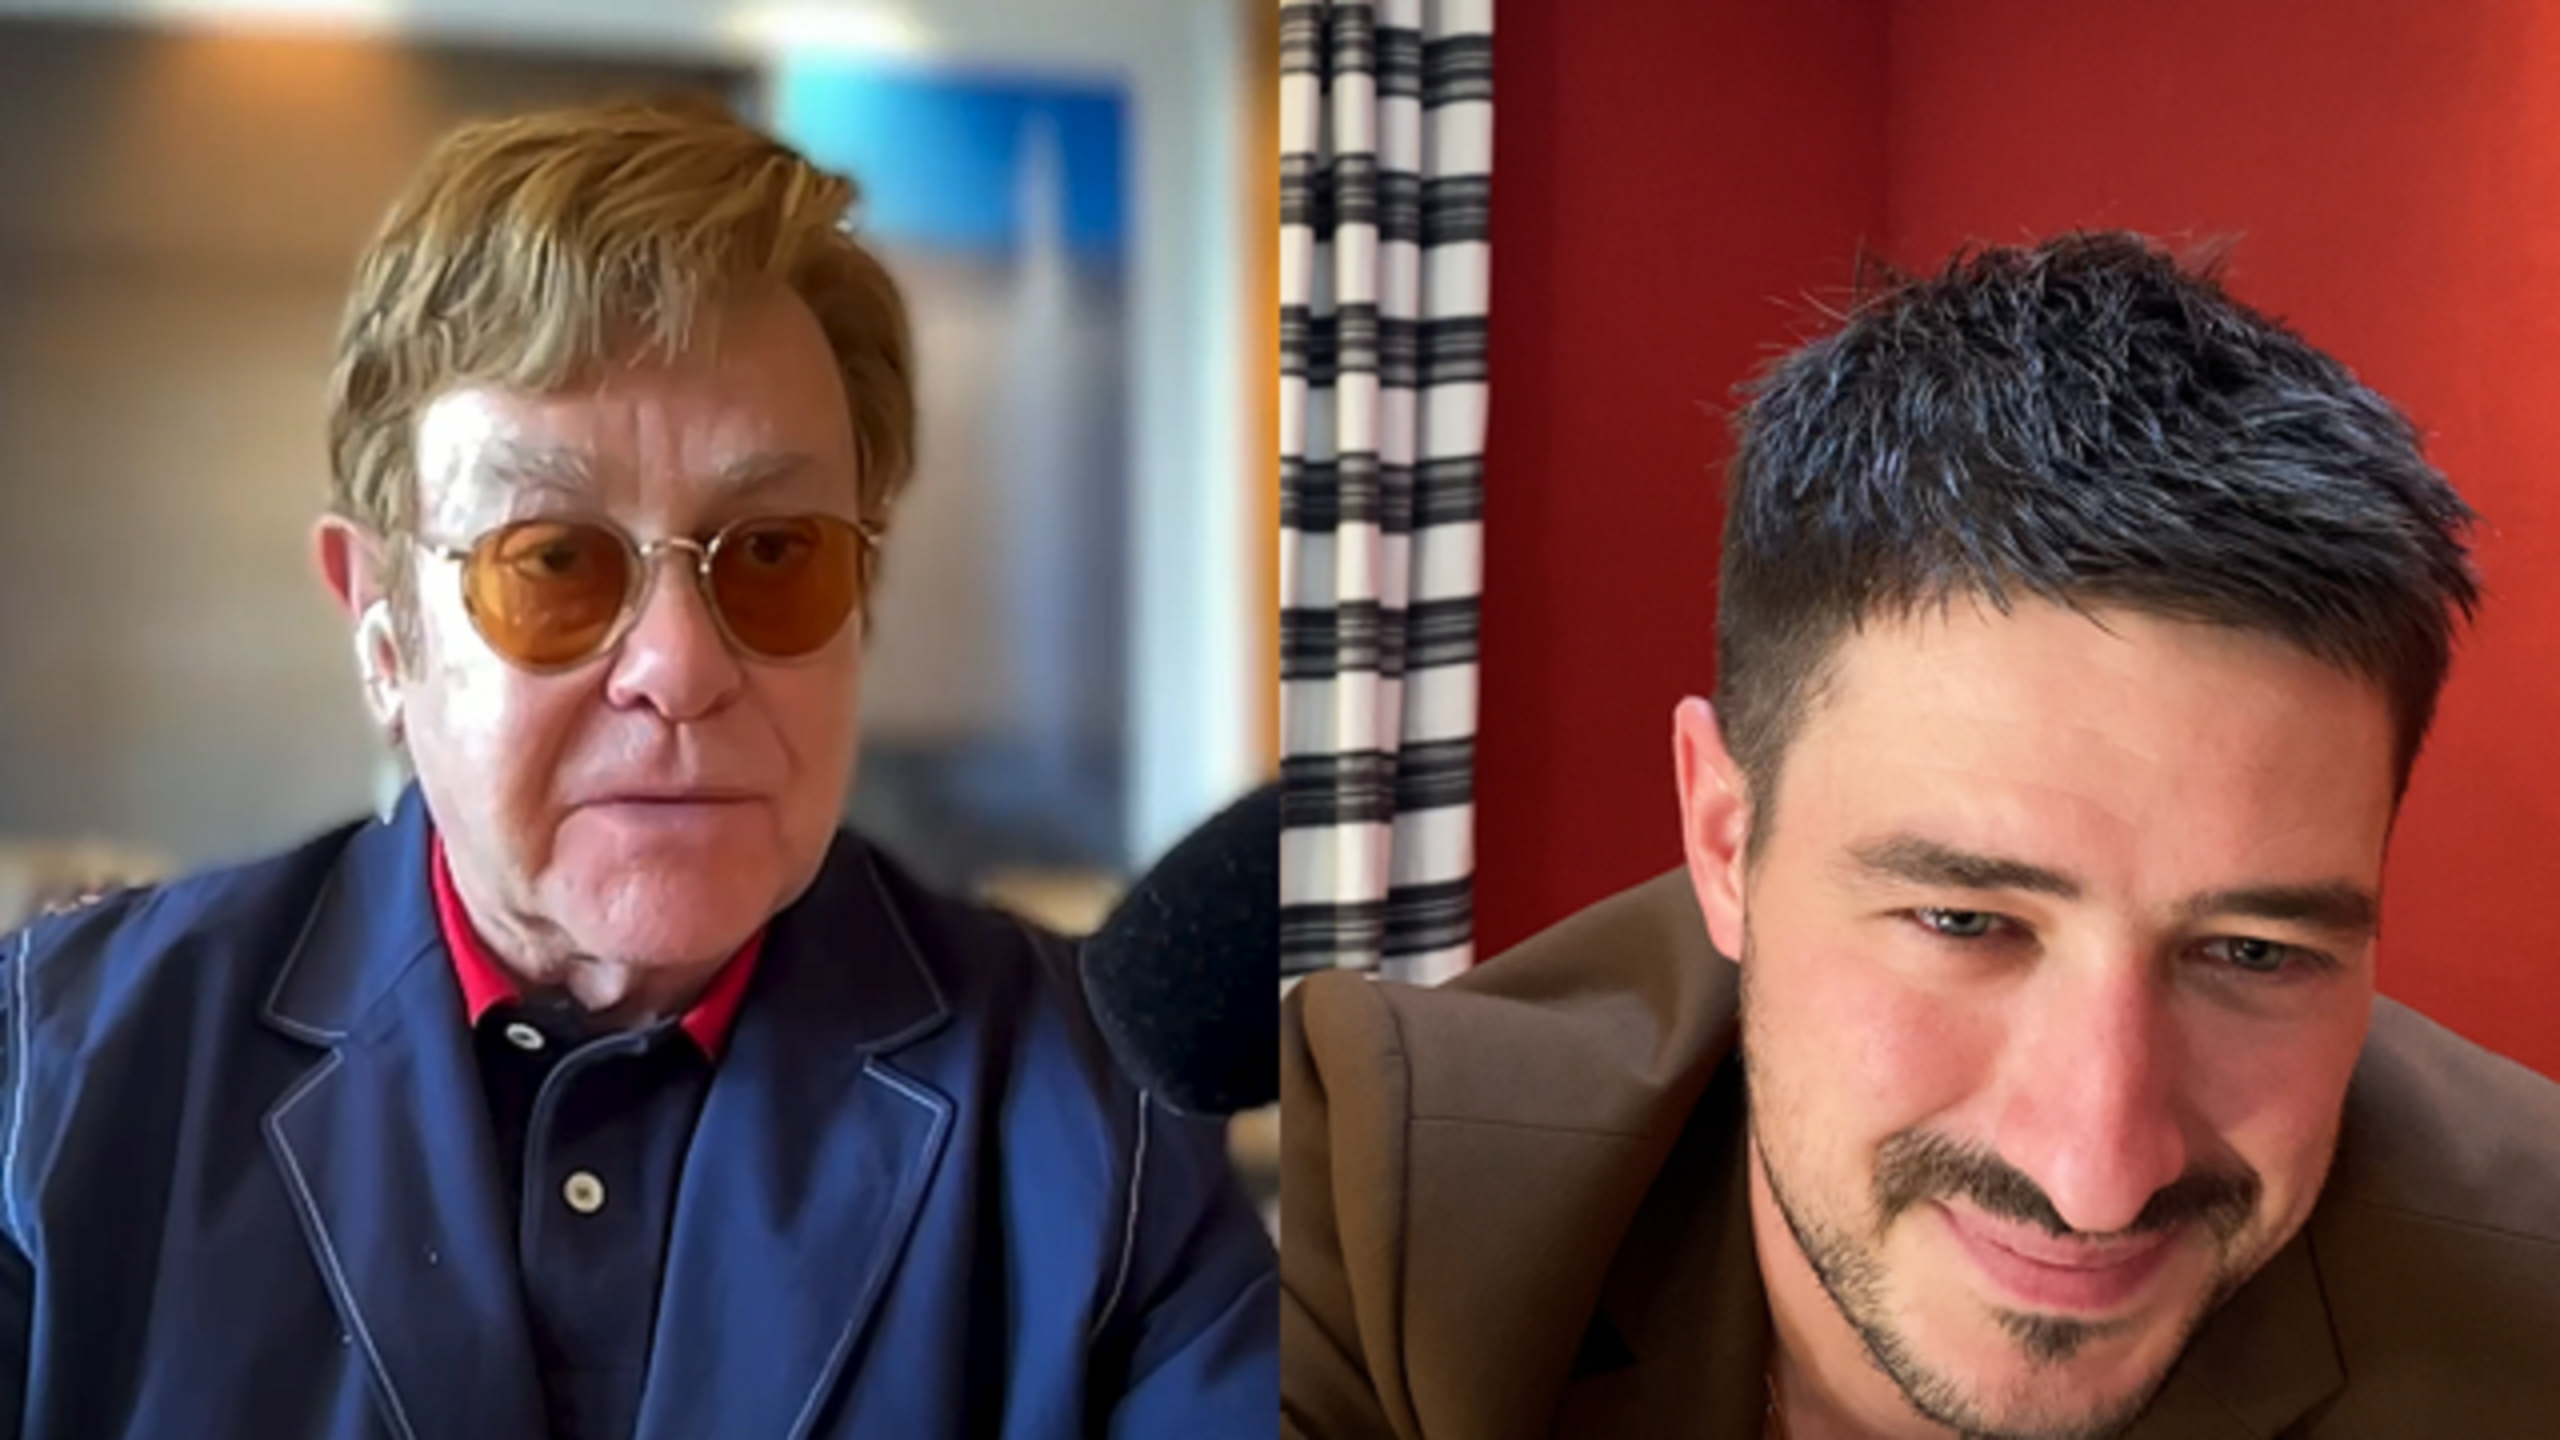 Marcus Mumford joins Elton John on Apple Music 1 to discuss Brandi Carlile, Mumford & Sons, his solo album, Joni Mitchell and his love for Elton